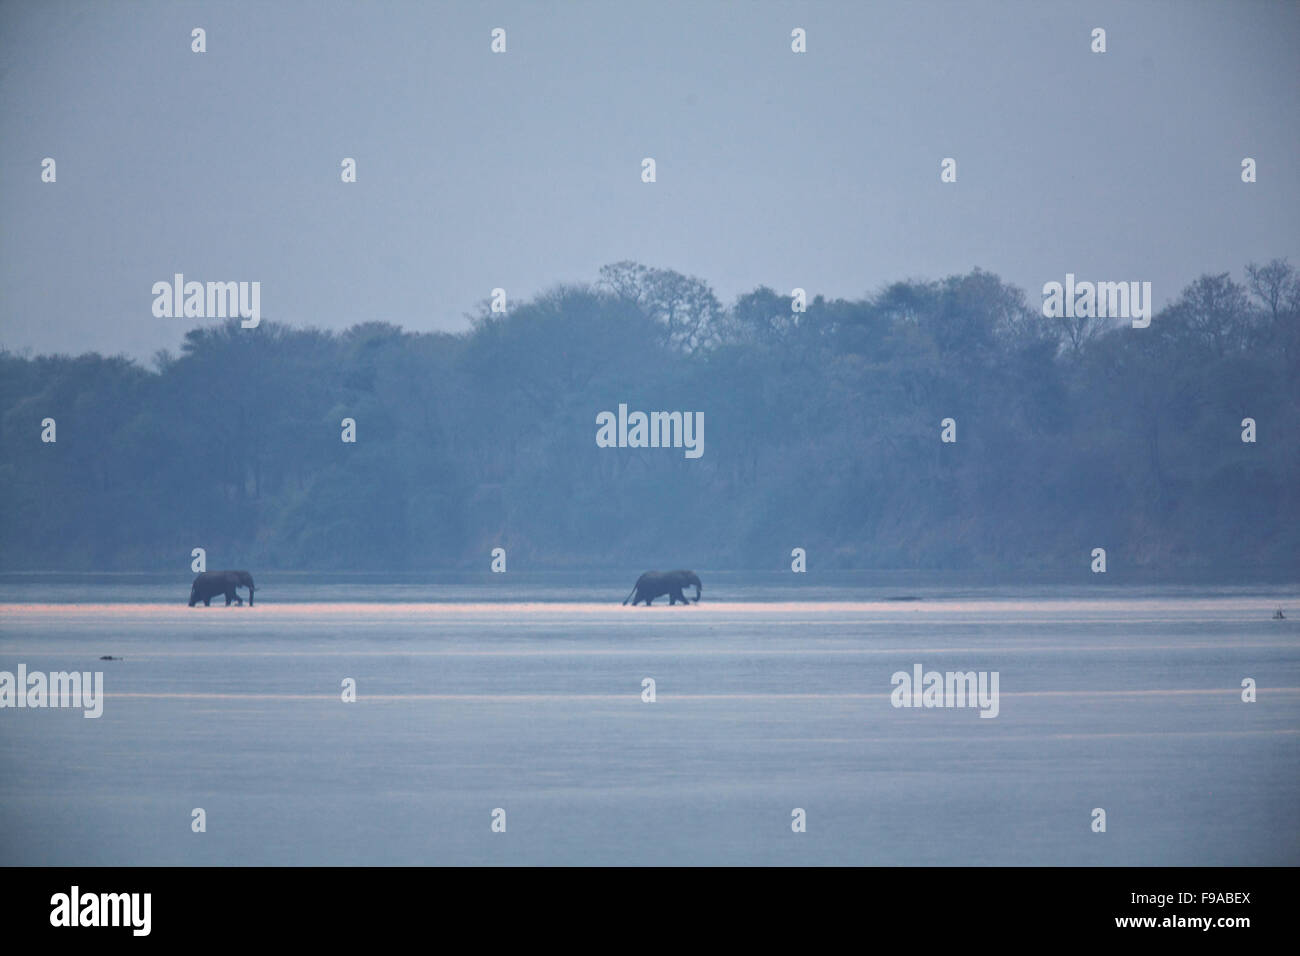 Elephants crossing the Zambezi river, Zimbabwe Stock Photo